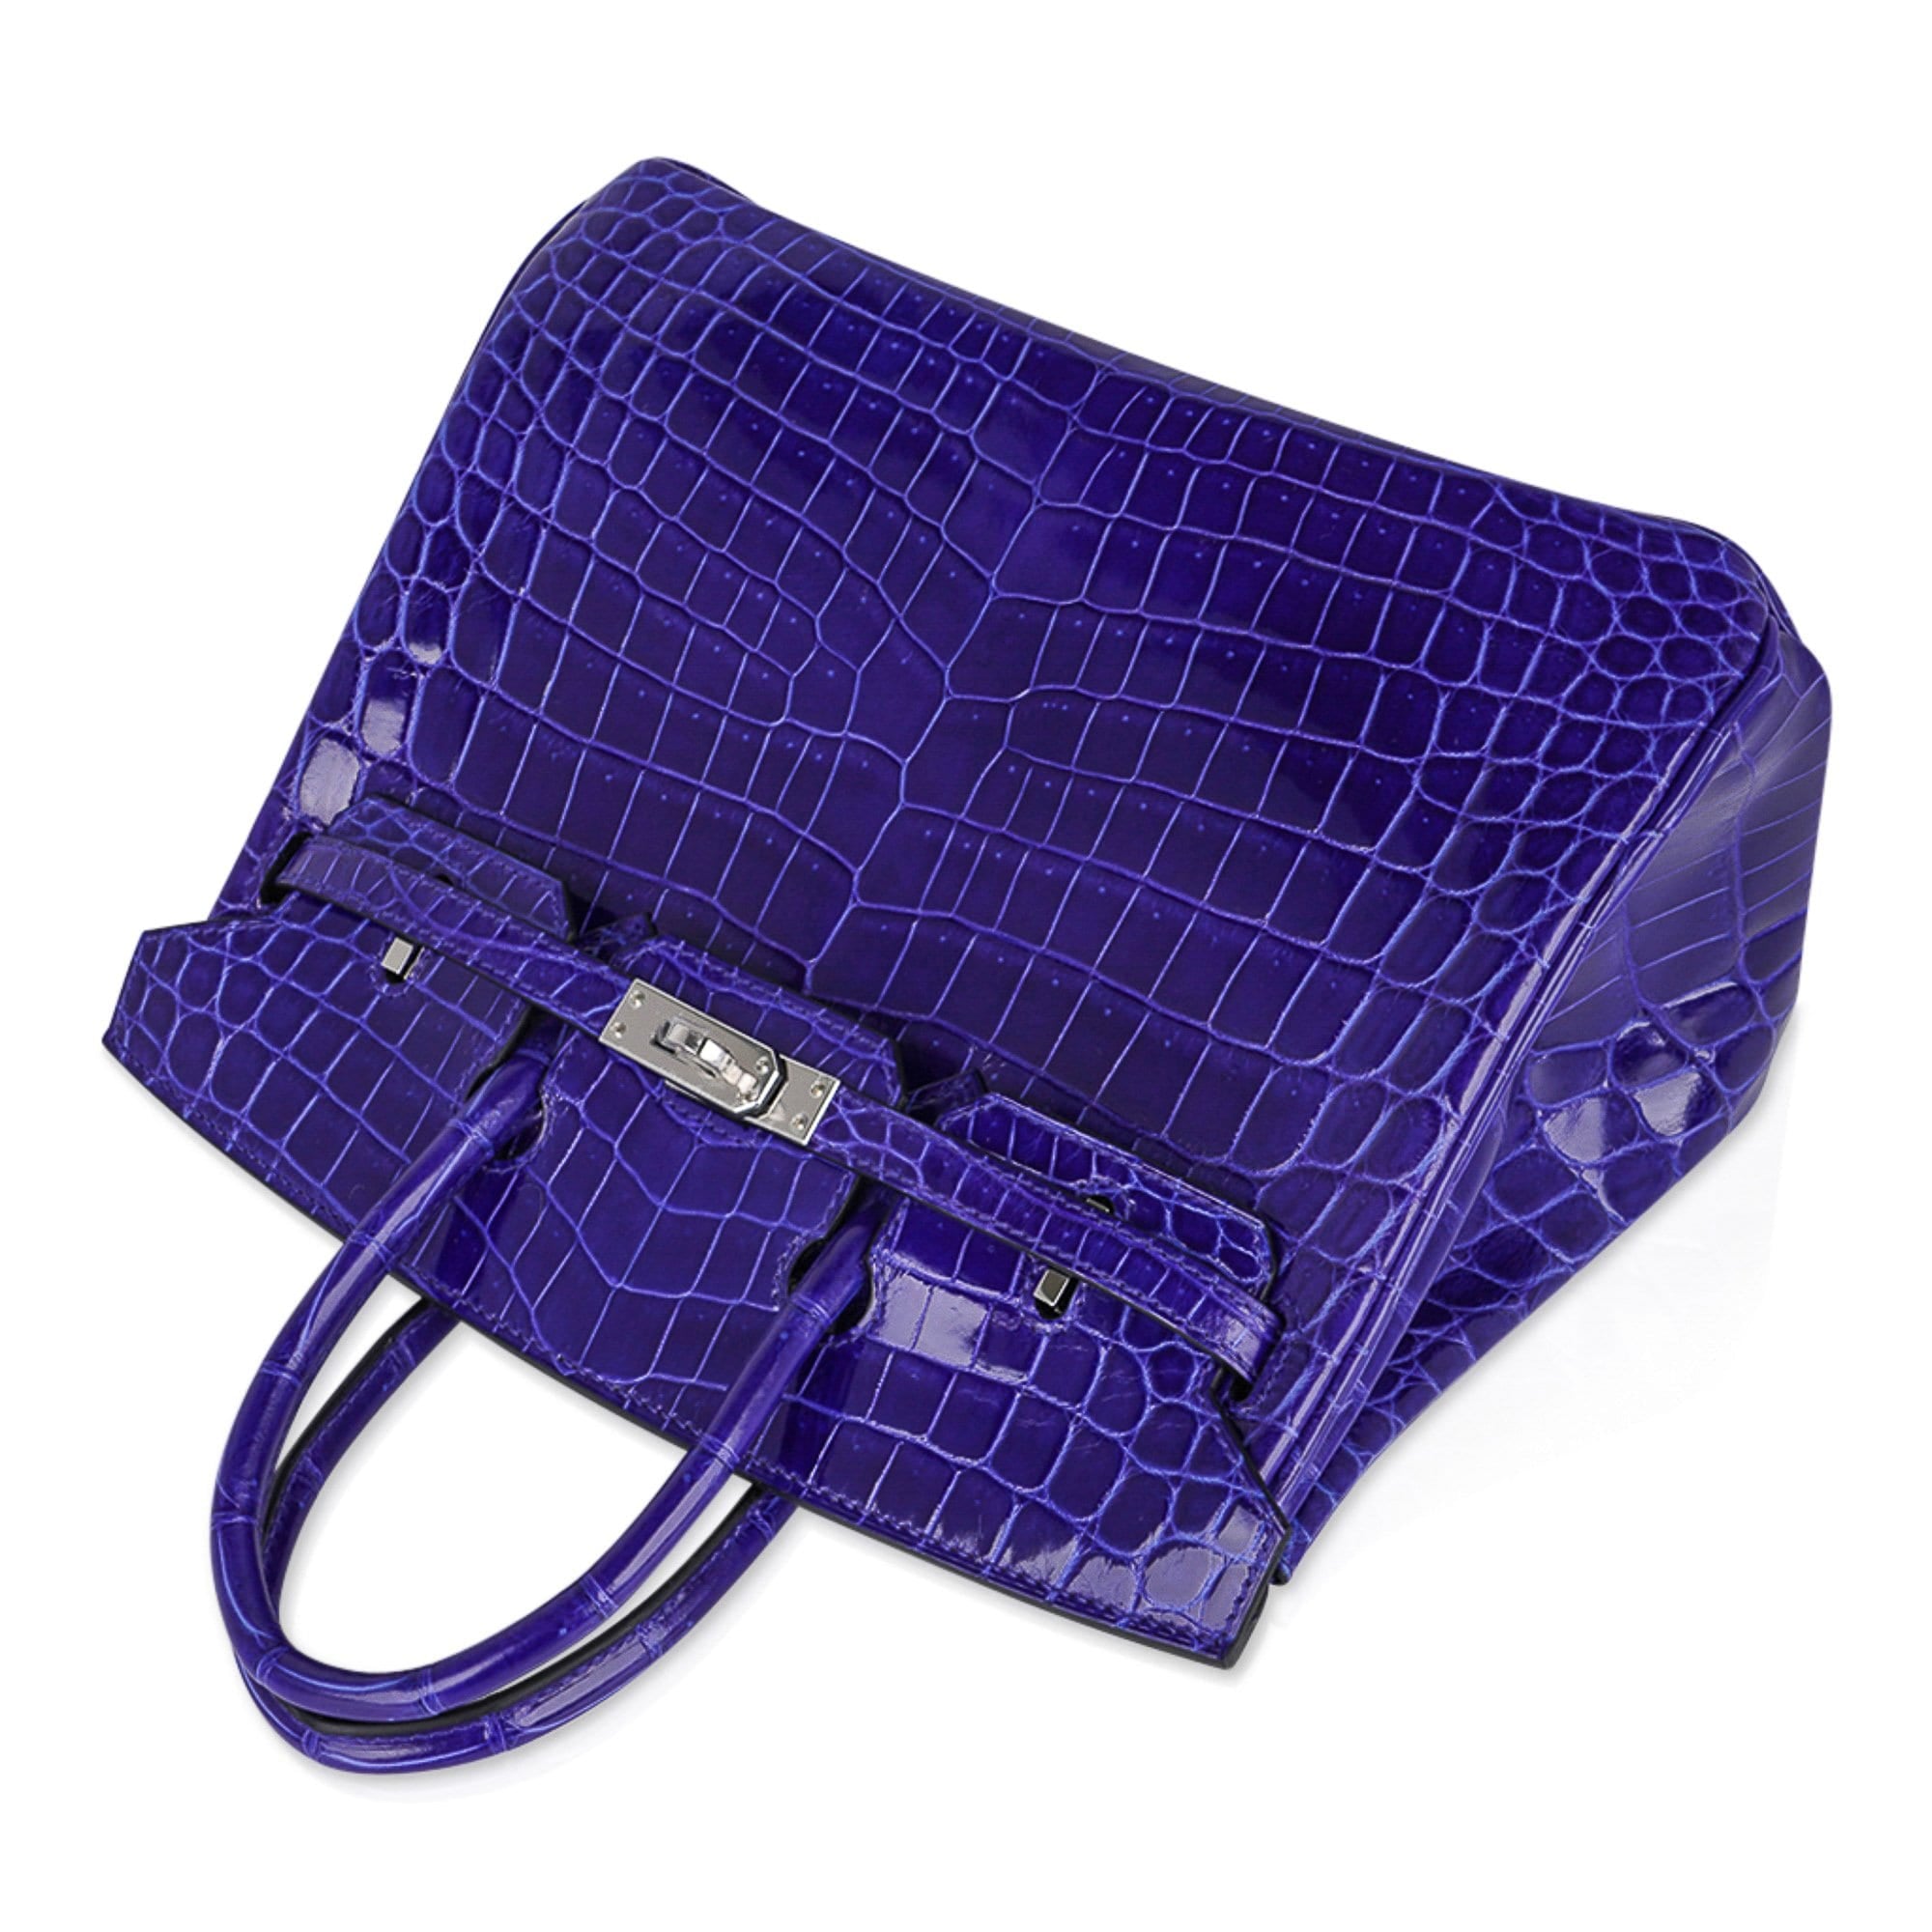 Hermes Birkin 30 Purple Crocodile Handbags  Hermes birkin, Crocodile  handbags, Birkin